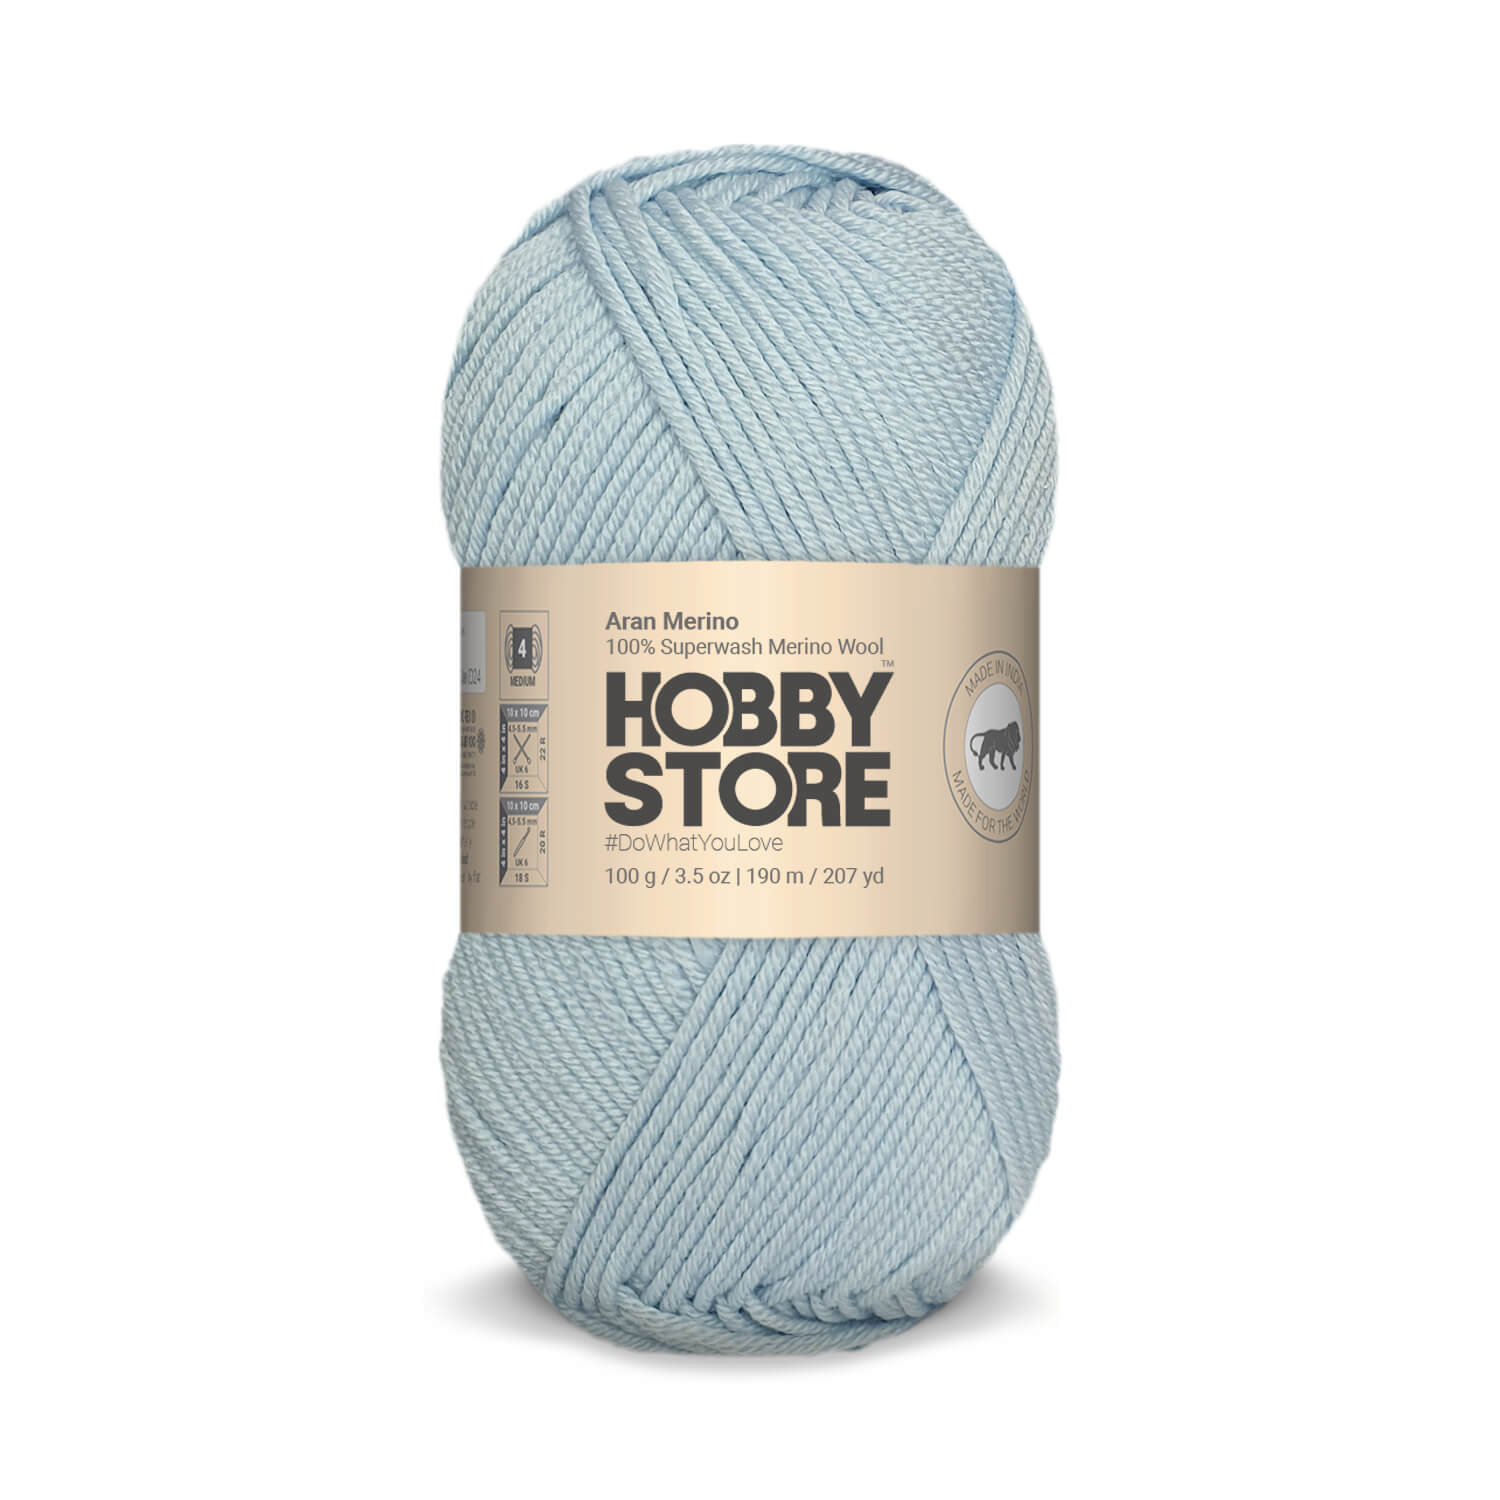 Aran Merino Wool by Hobby Store - Baby Blue AM022